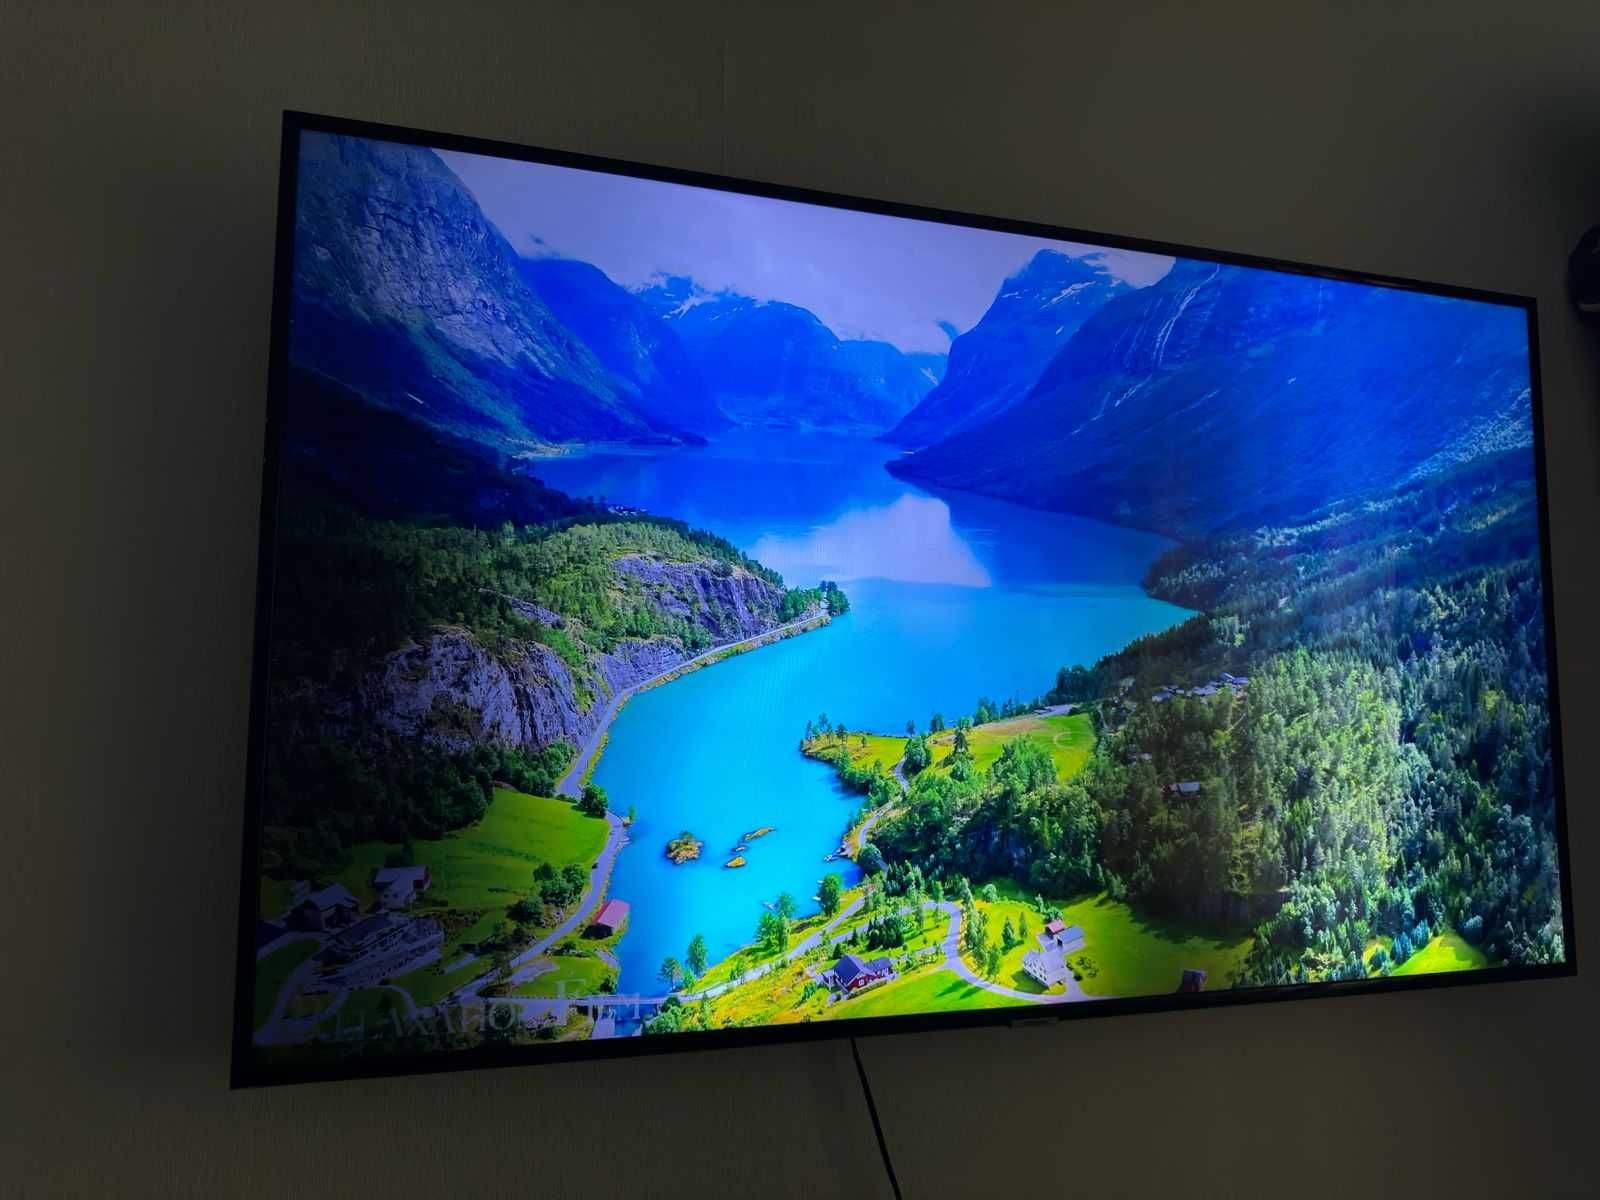 Samsung Smart TV 55 дюйм (140см)